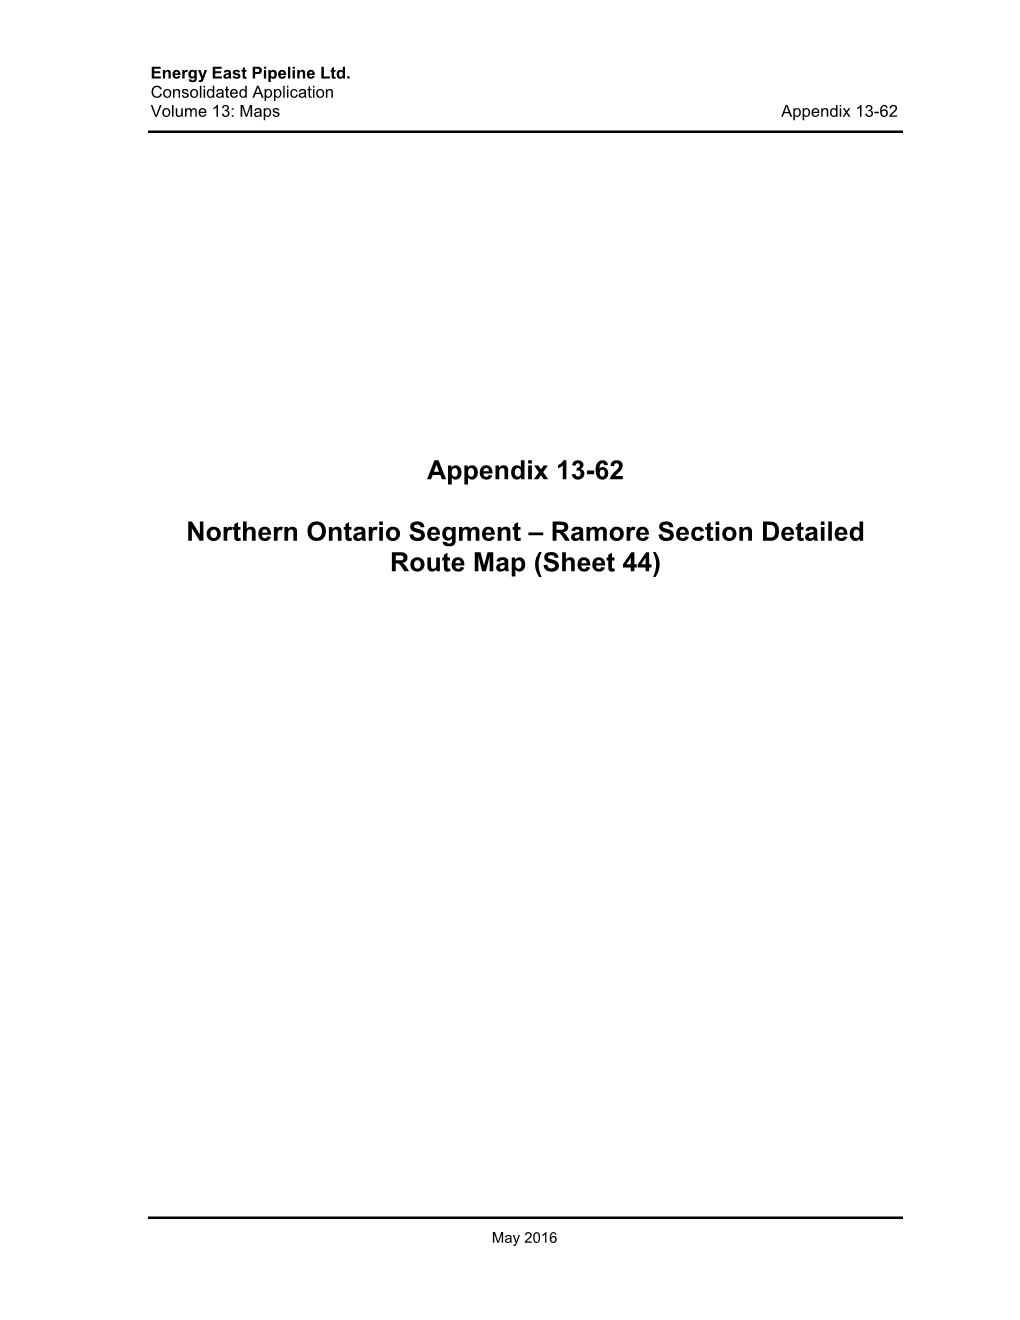 Appendix 13-62 Northern Ontario Segment – Ramore Section